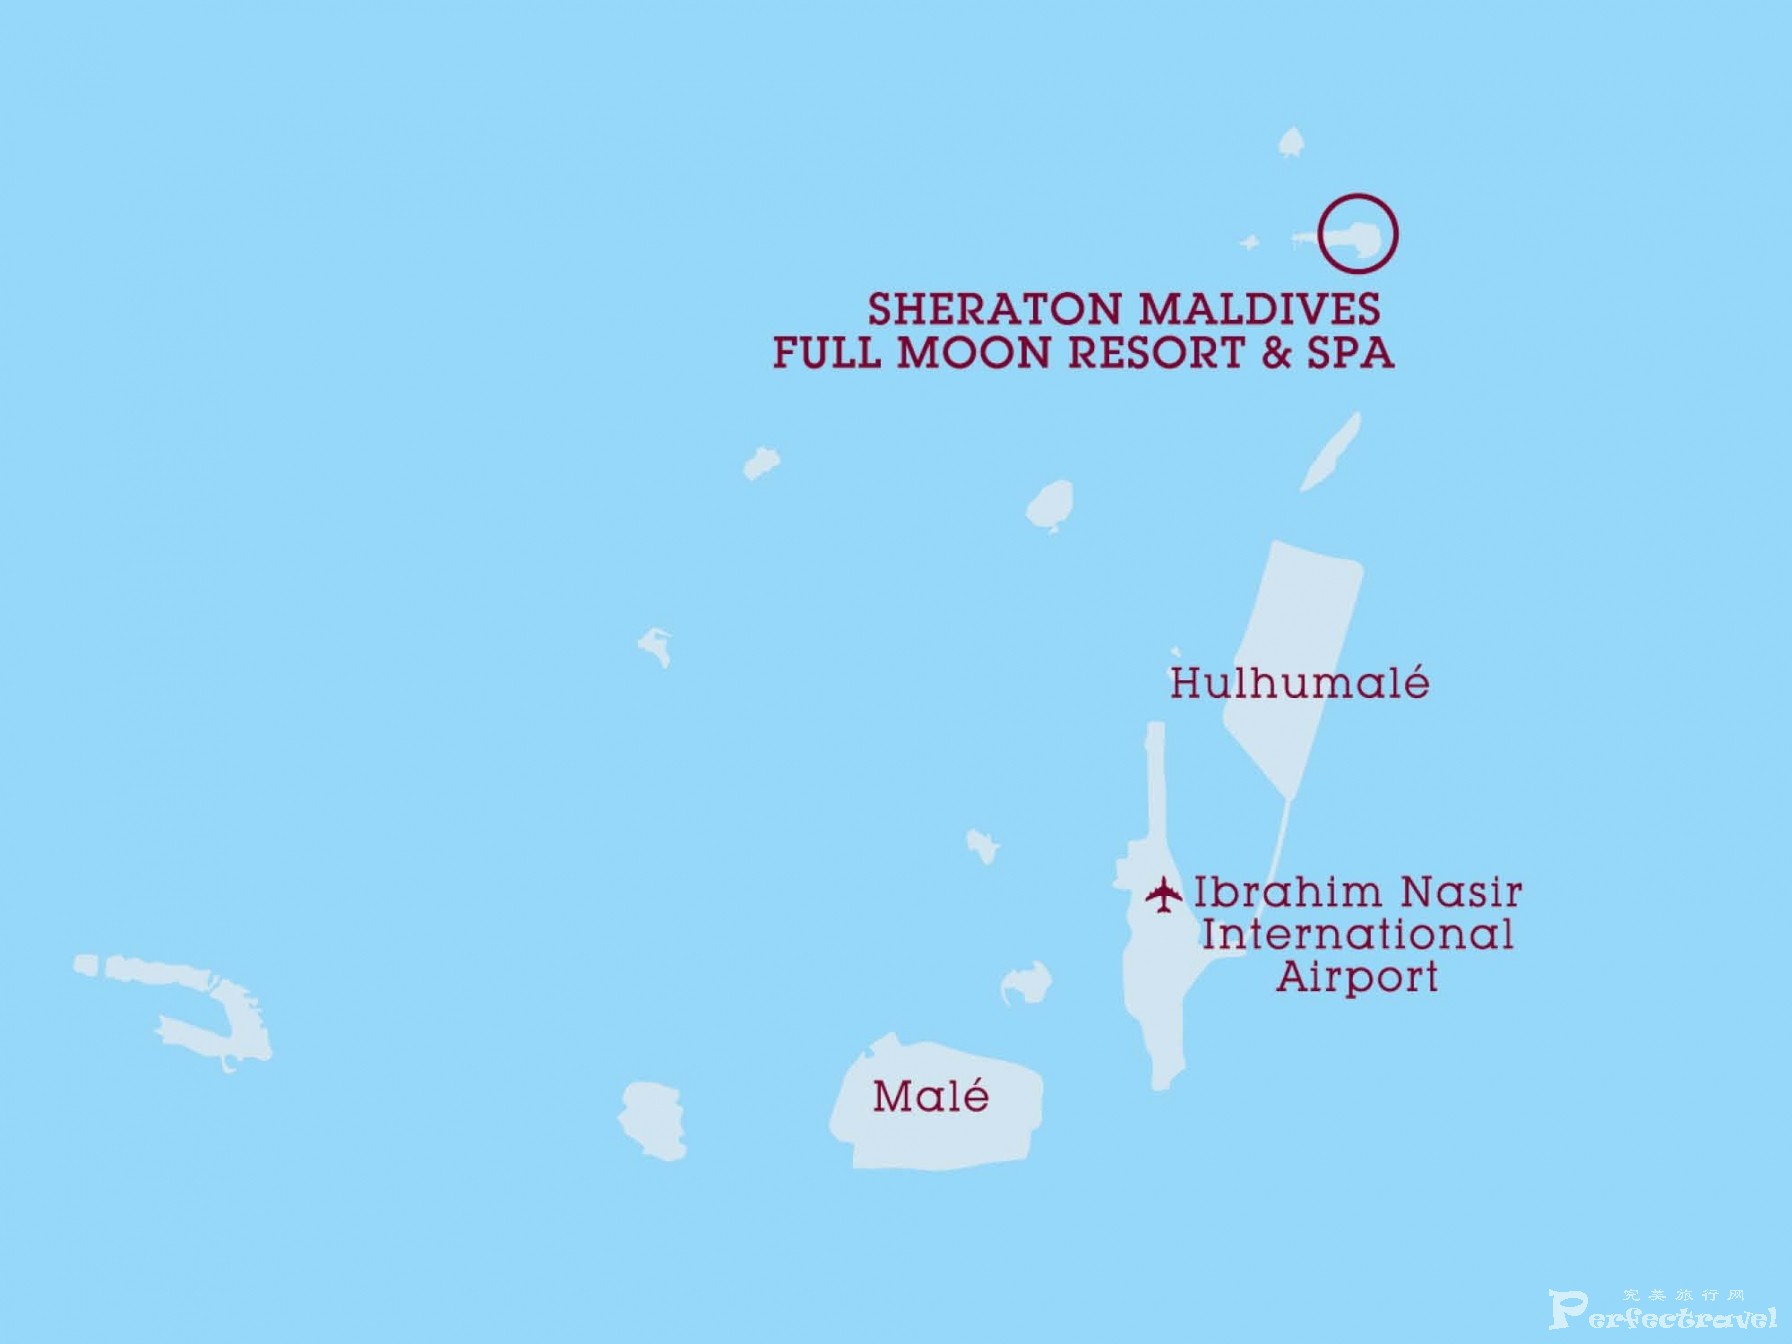 Sheraton Maldives - Overview Presentation 2015_Page_03.jpg